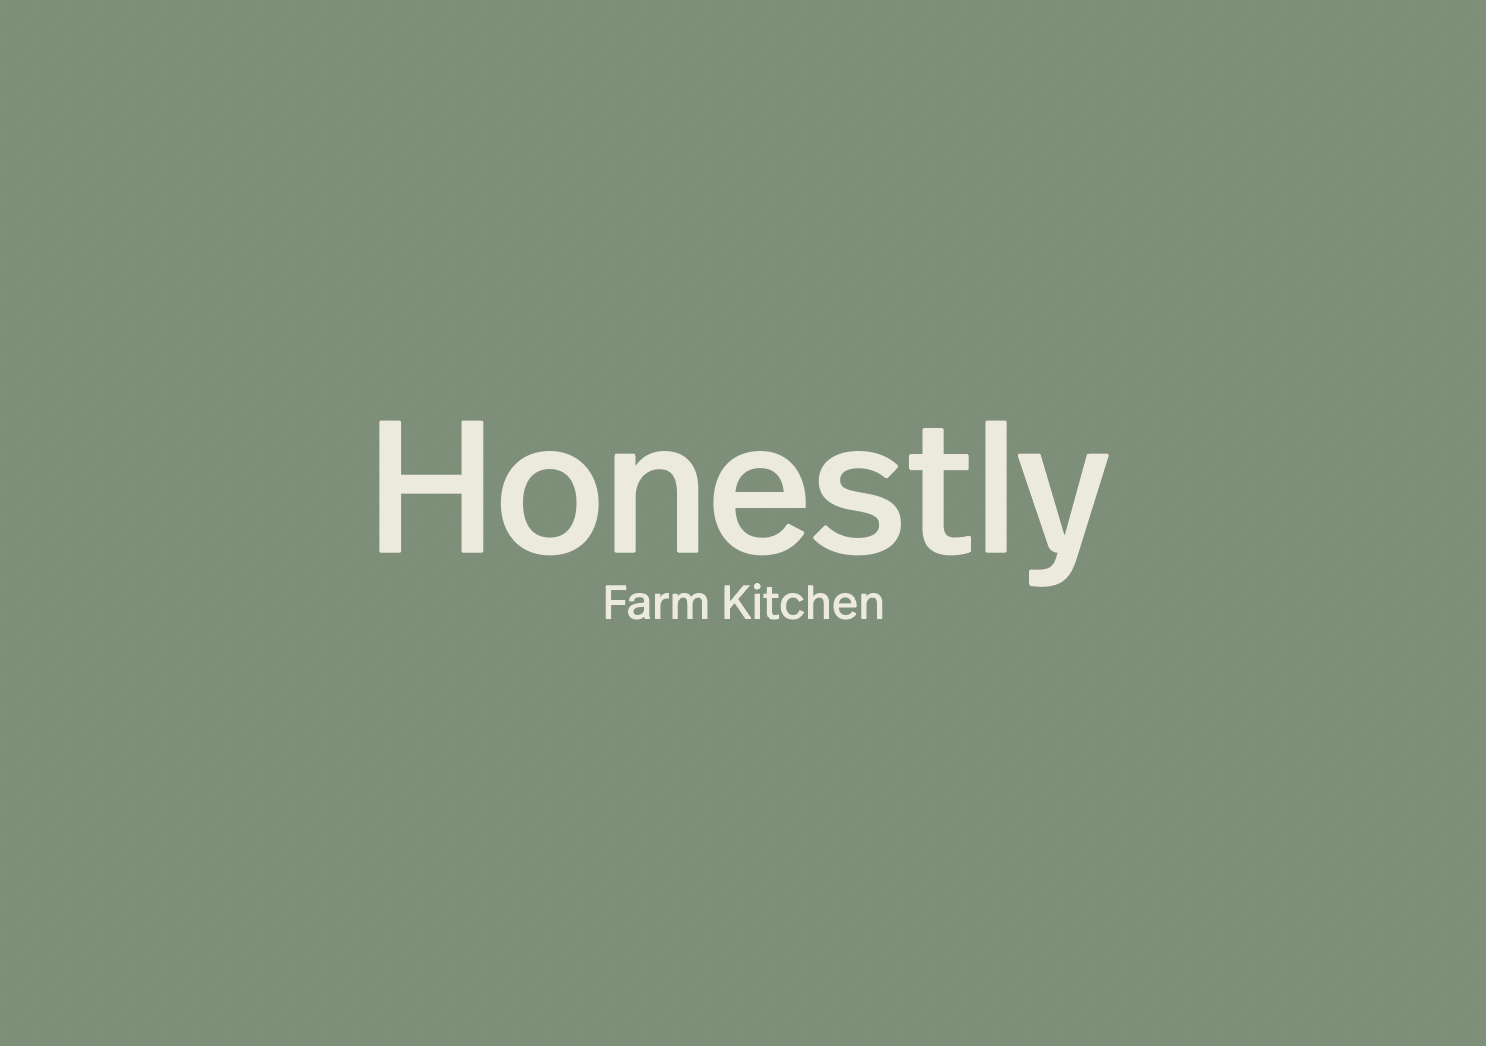 Honestly Farm Kitchen, Complete Branding